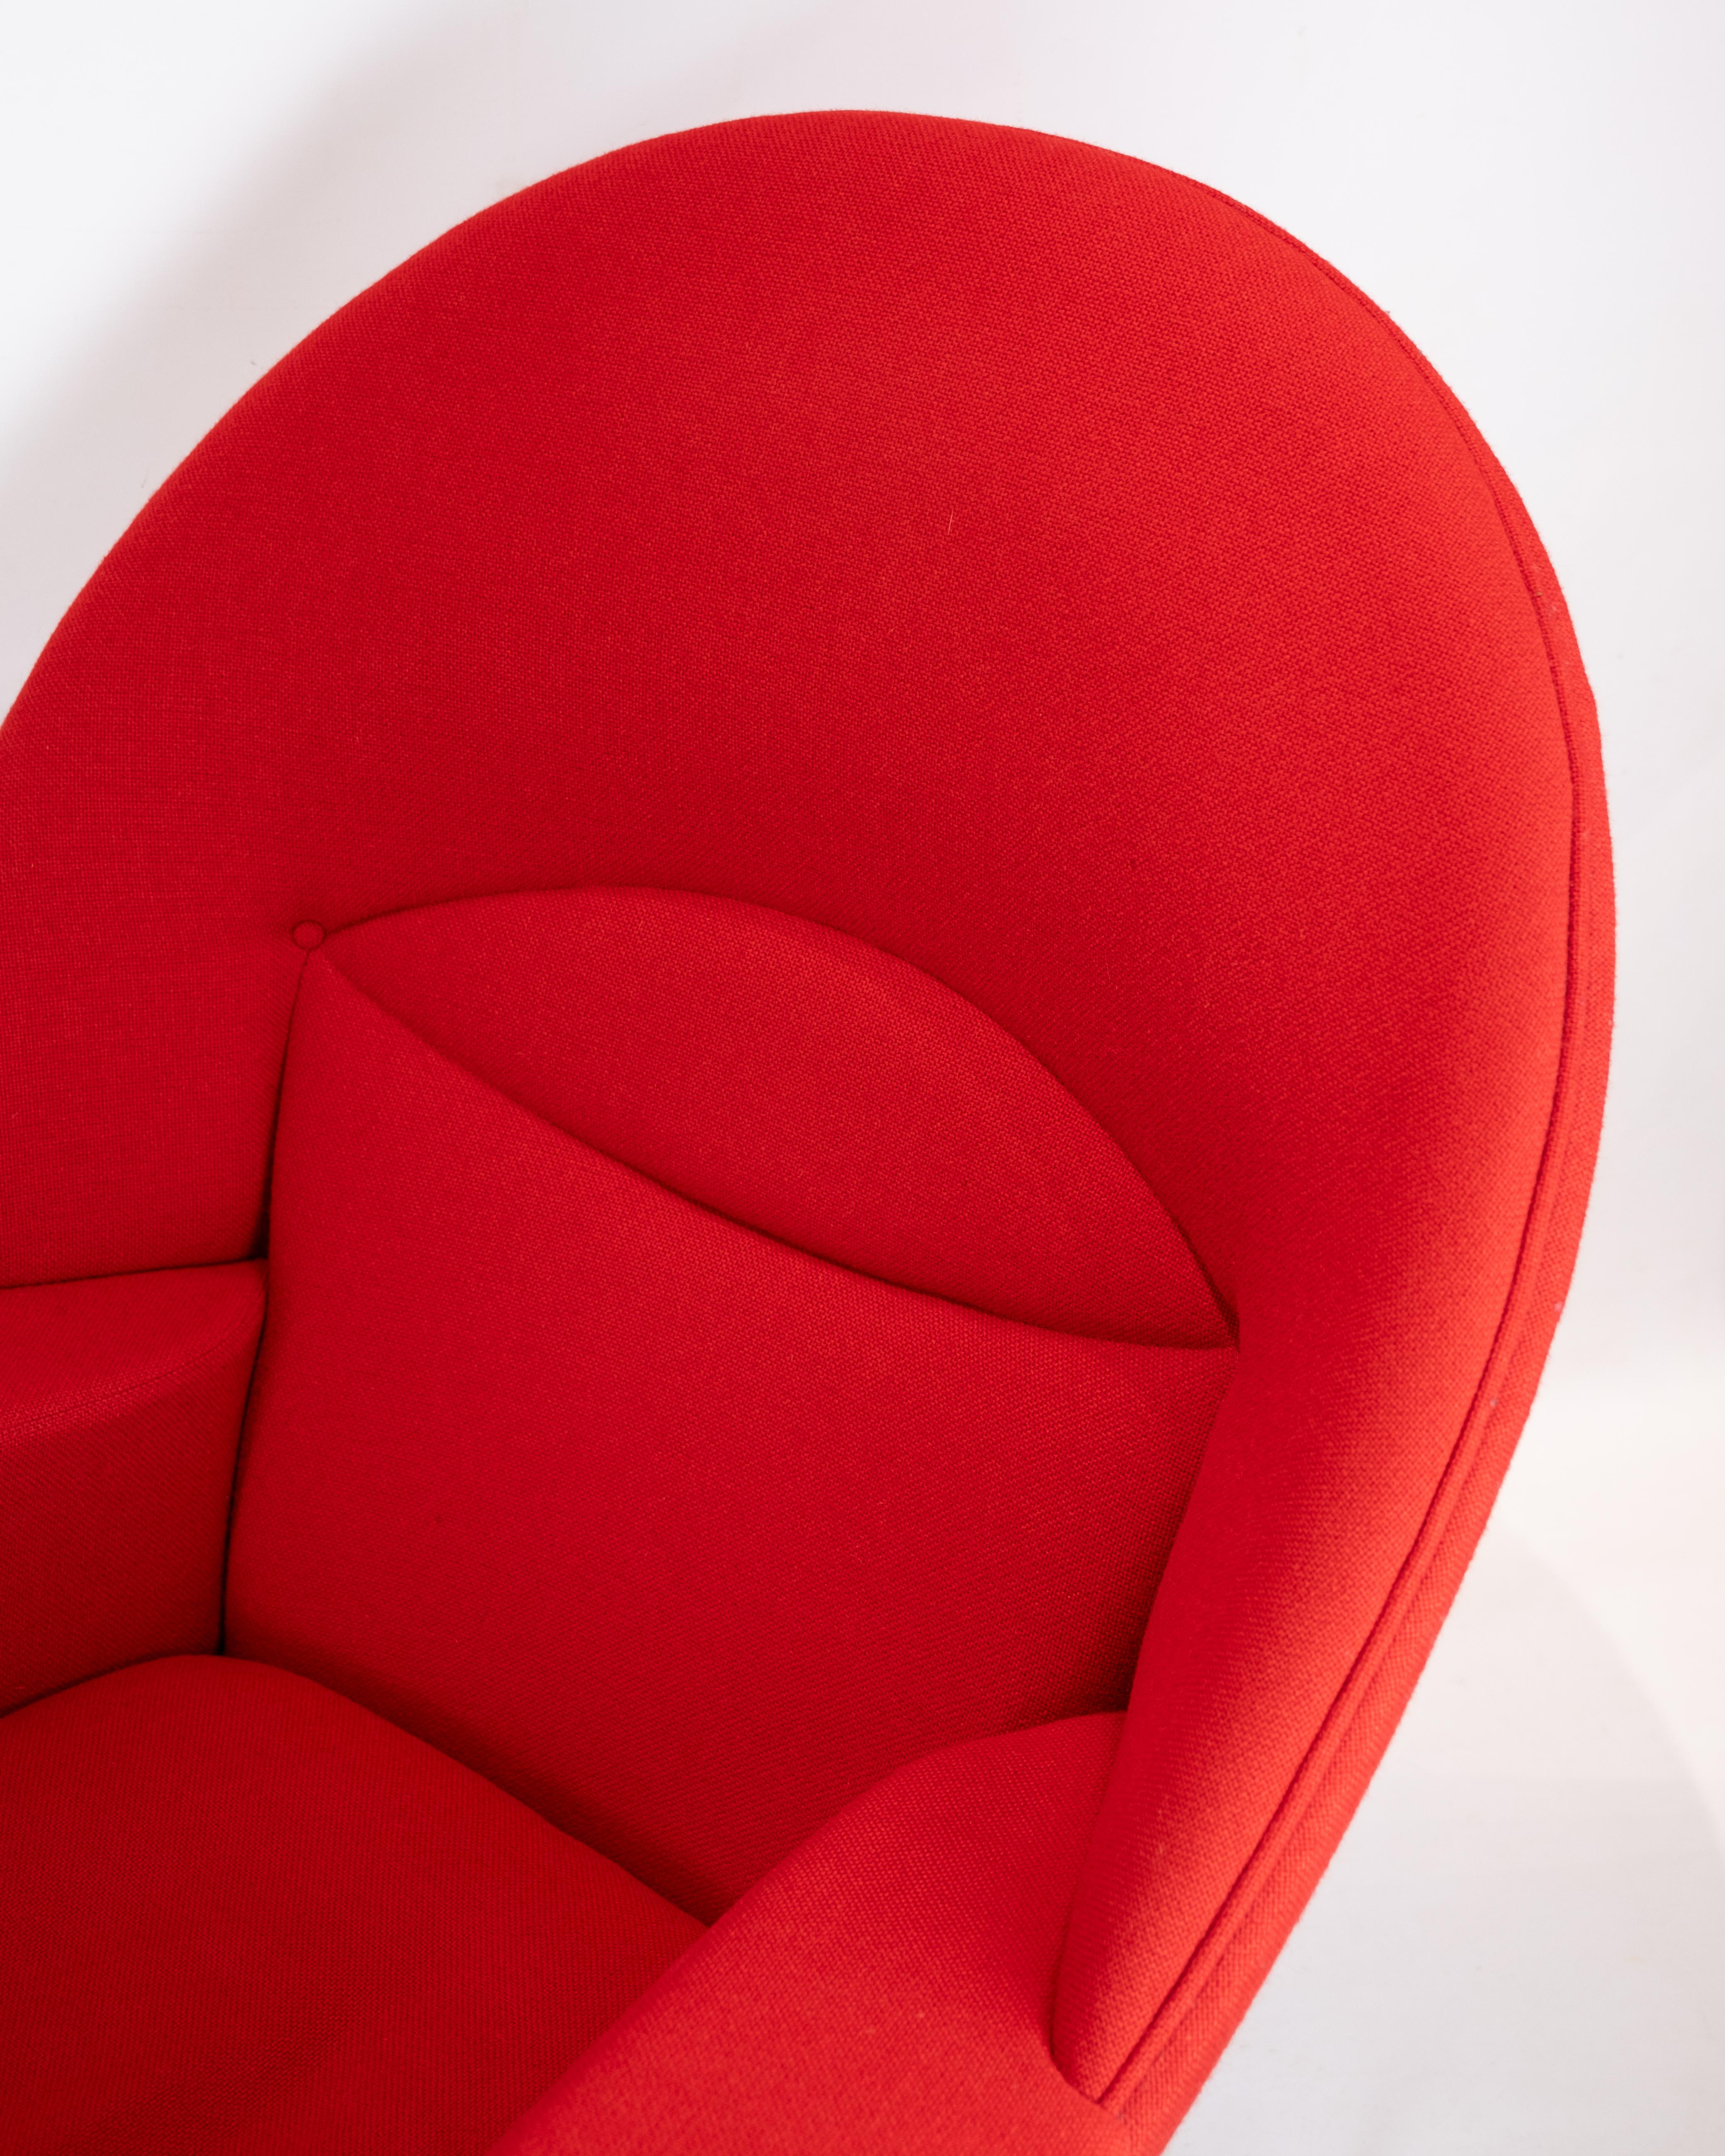 Danish Oculus Chair in Red Hallingdal Fabric Designed By Hans J. Wegner 